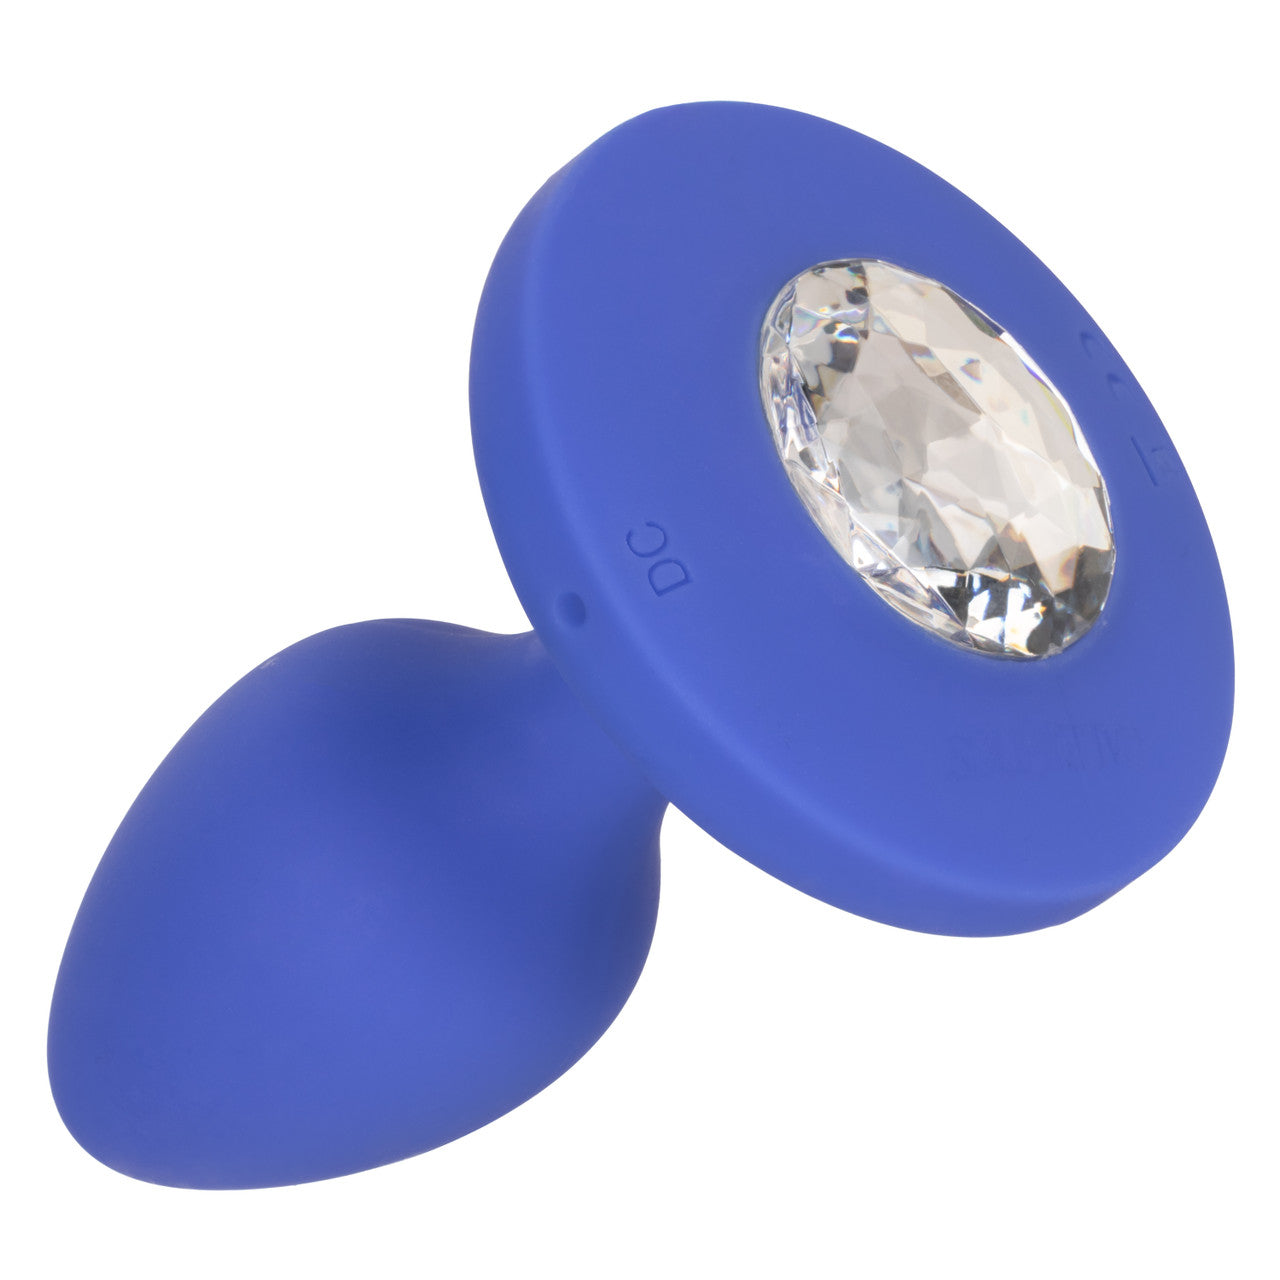 Cheeky Gems Medium Rechargeable Vibrating Probe - Blue